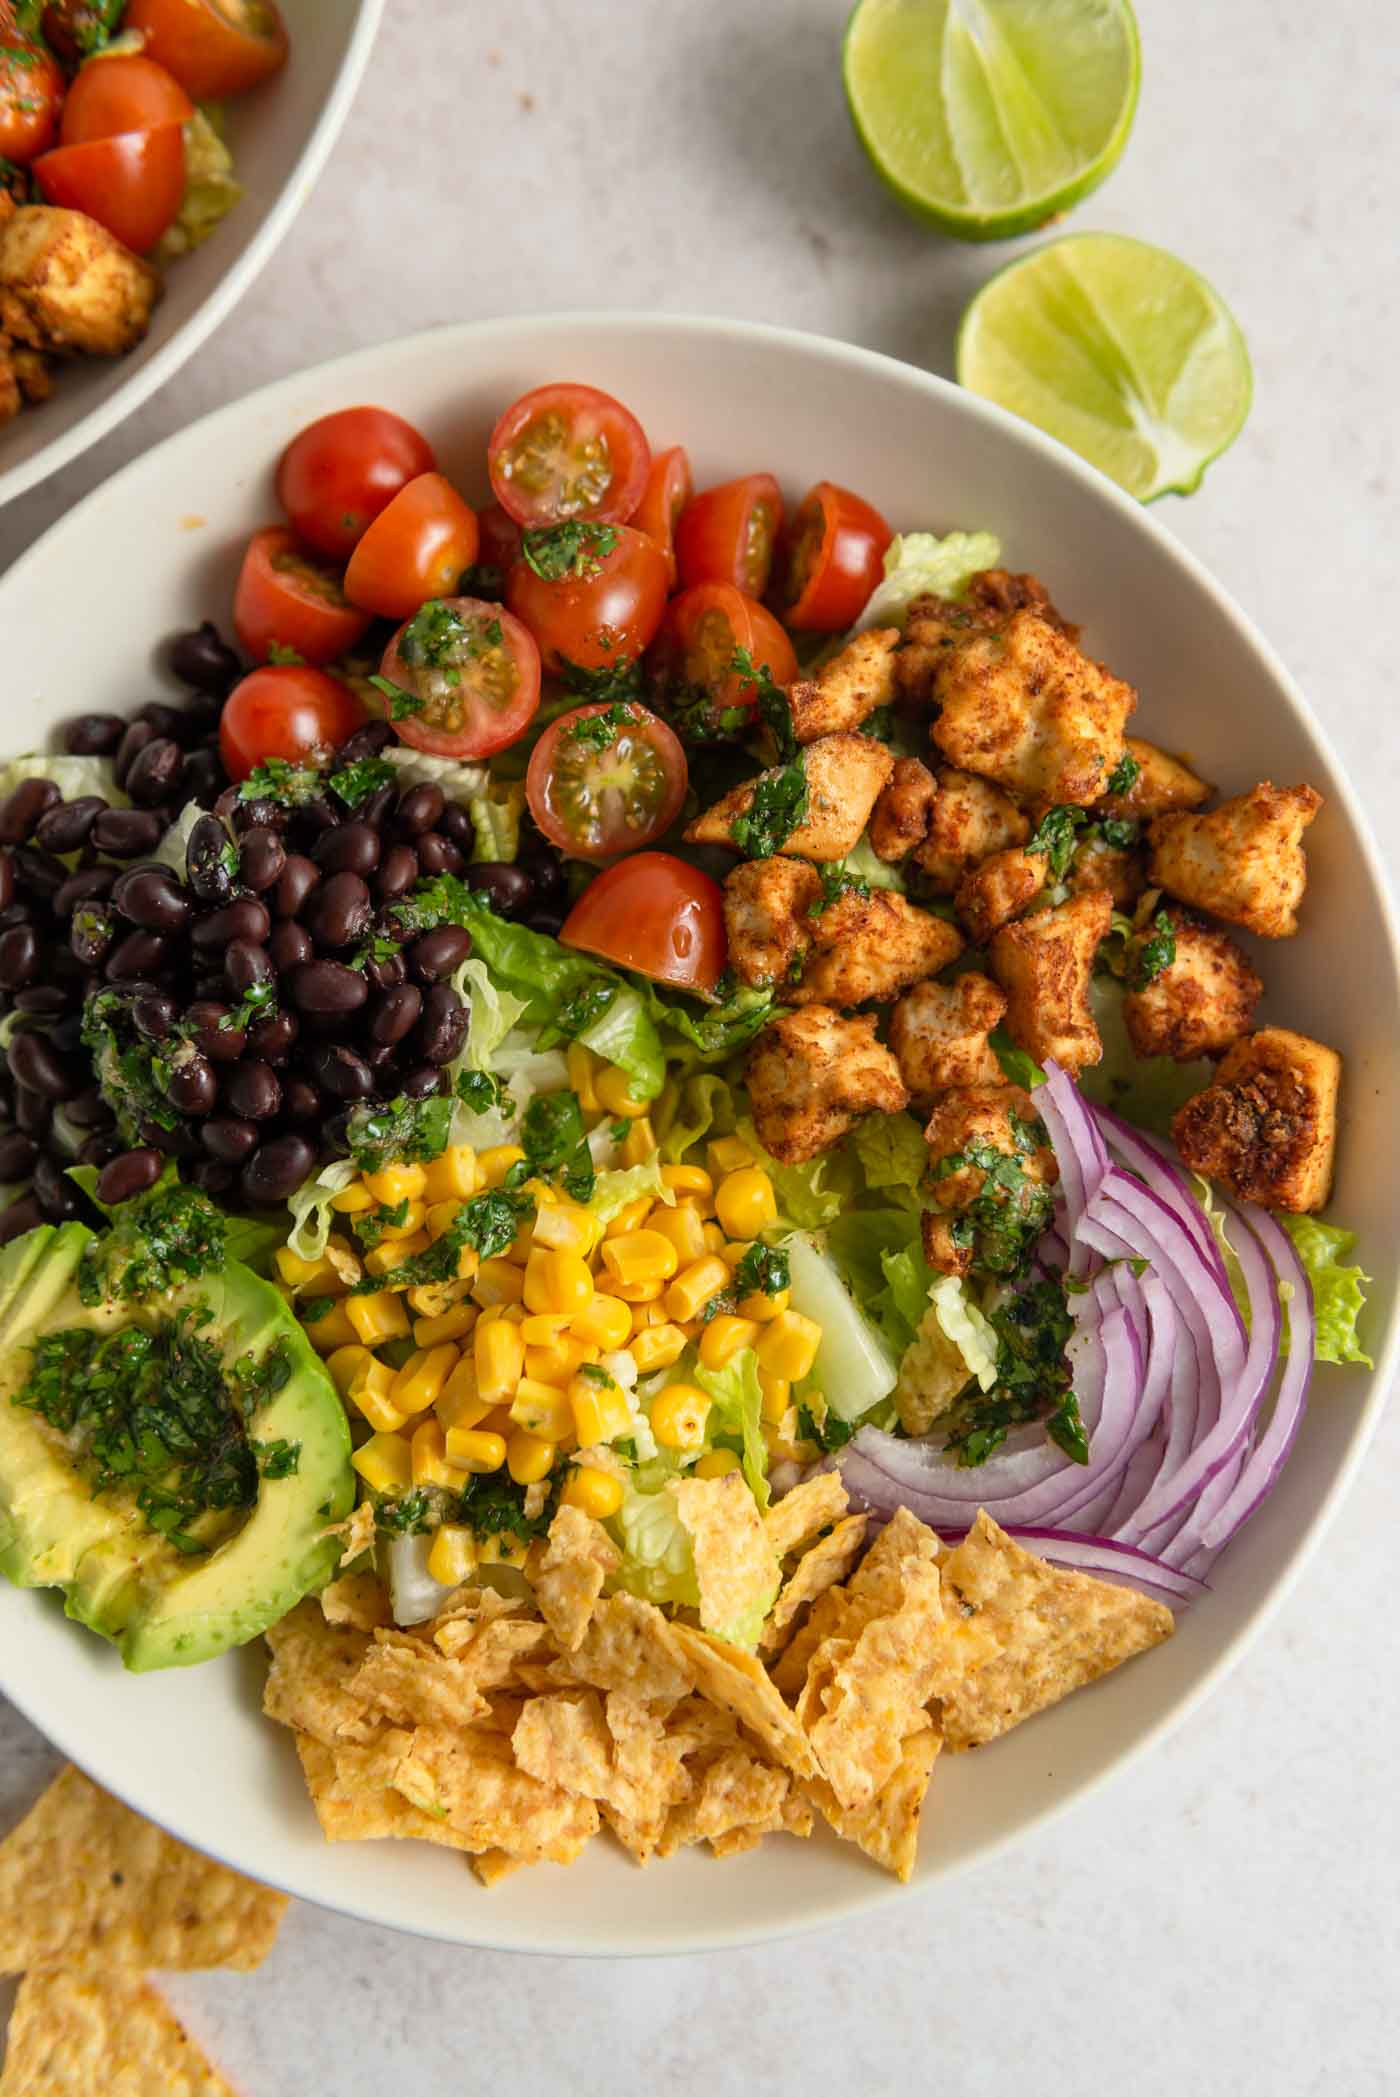 https://runningonrealfood.com/wp-content/uploads/2023/04/vegan-gluten-free-healthy-santa-fe-salad-recipe-cilantro-lime-dressing-15.jpg